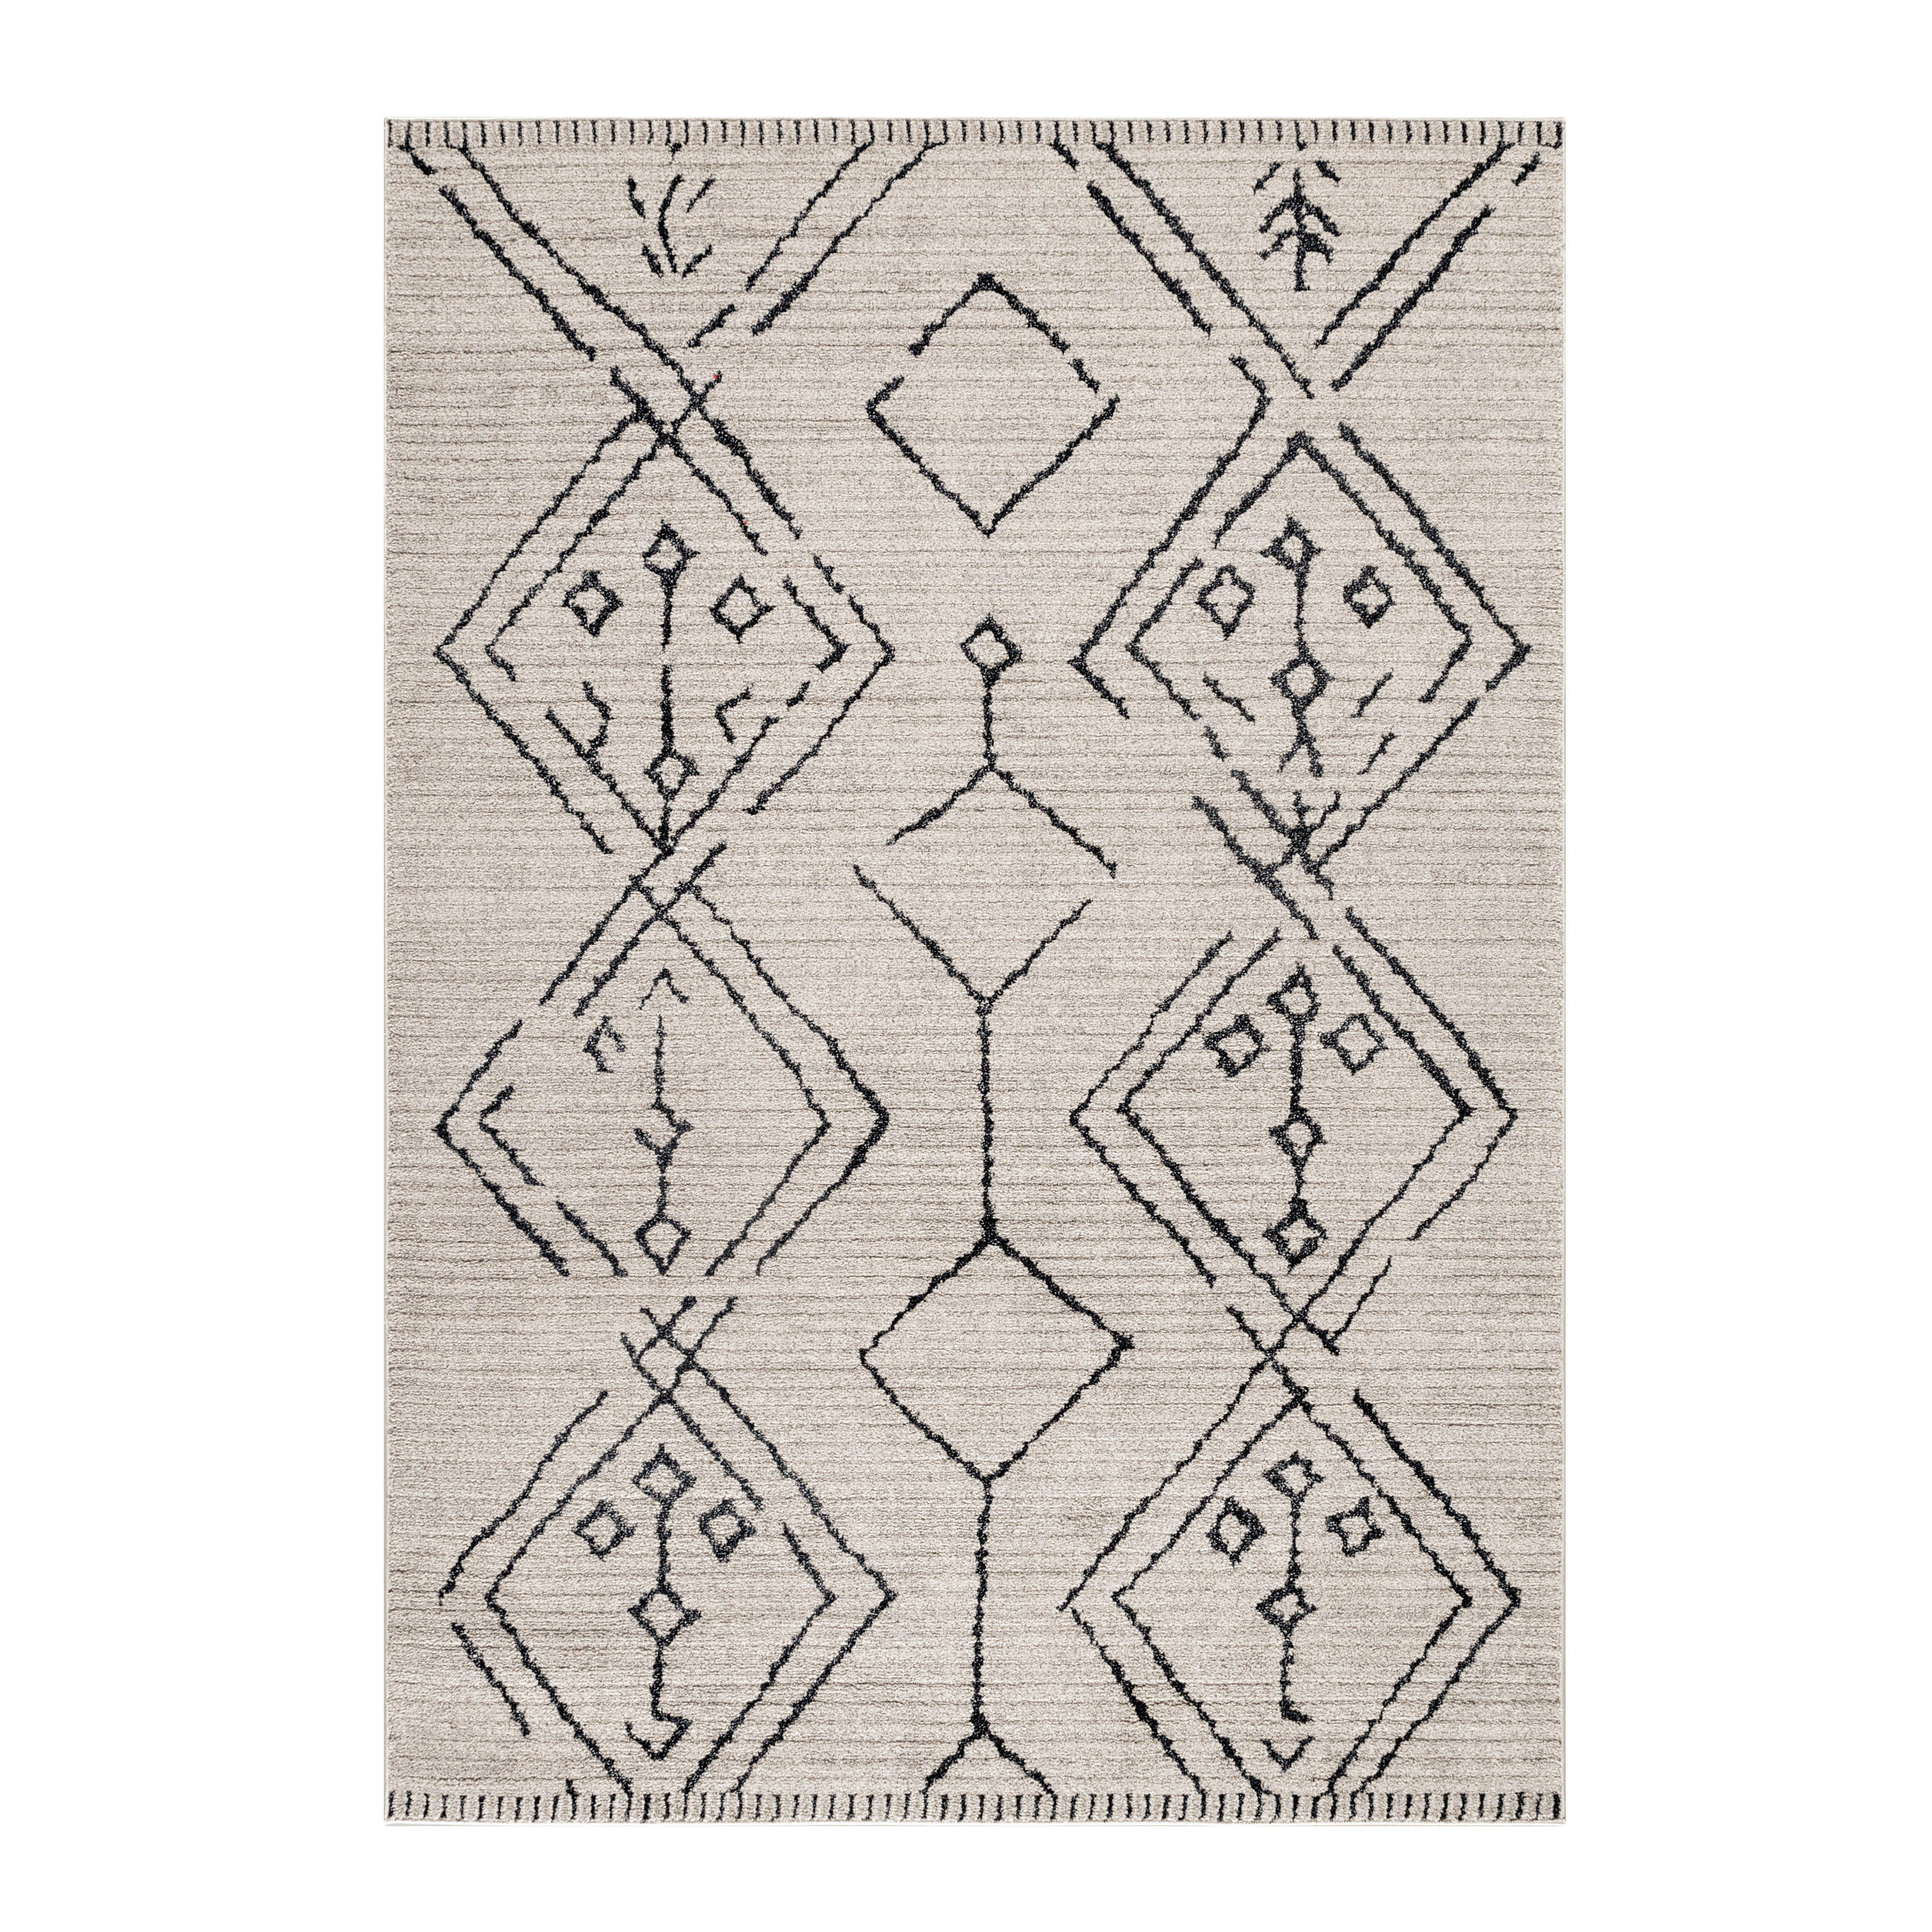 WEBTEPPICH  160/230 cm  Beige   - Beige, Design, Textil (160/230cm) - Novel